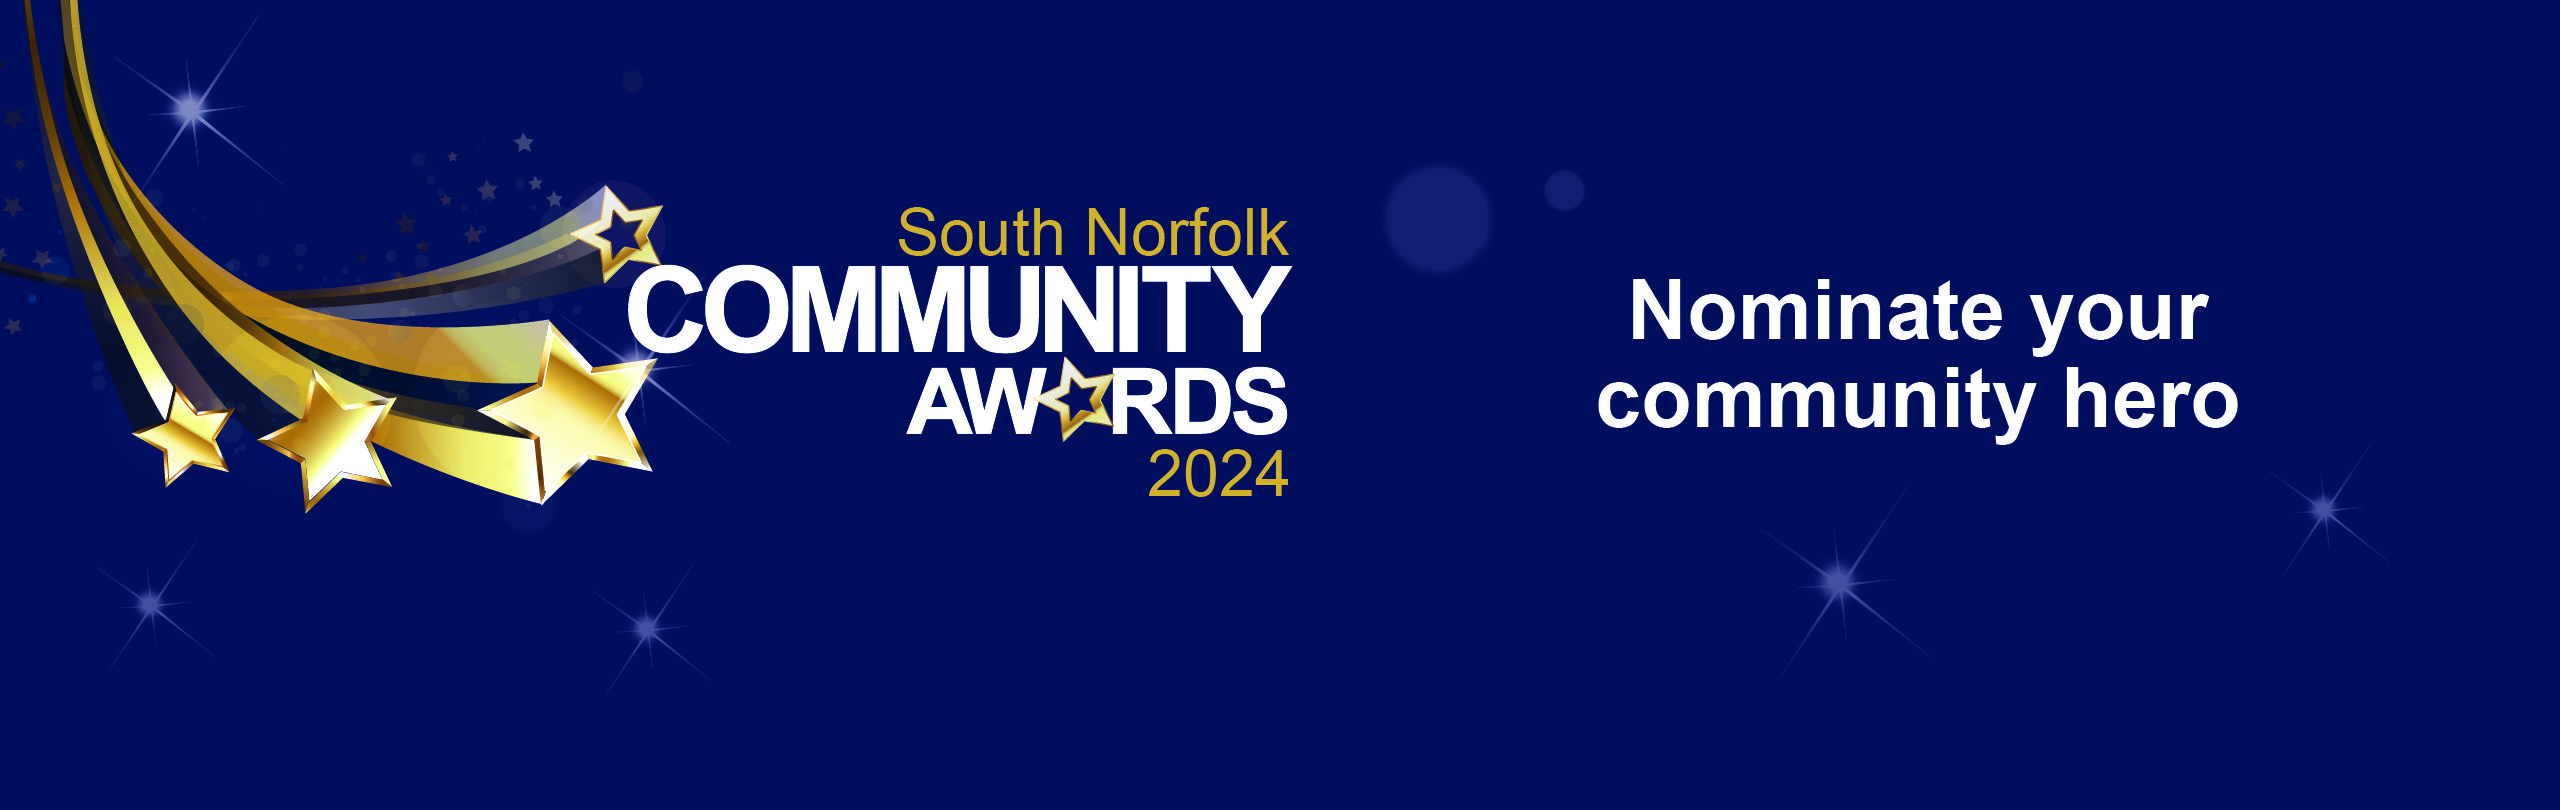 South Norfolk Community Awards 2023